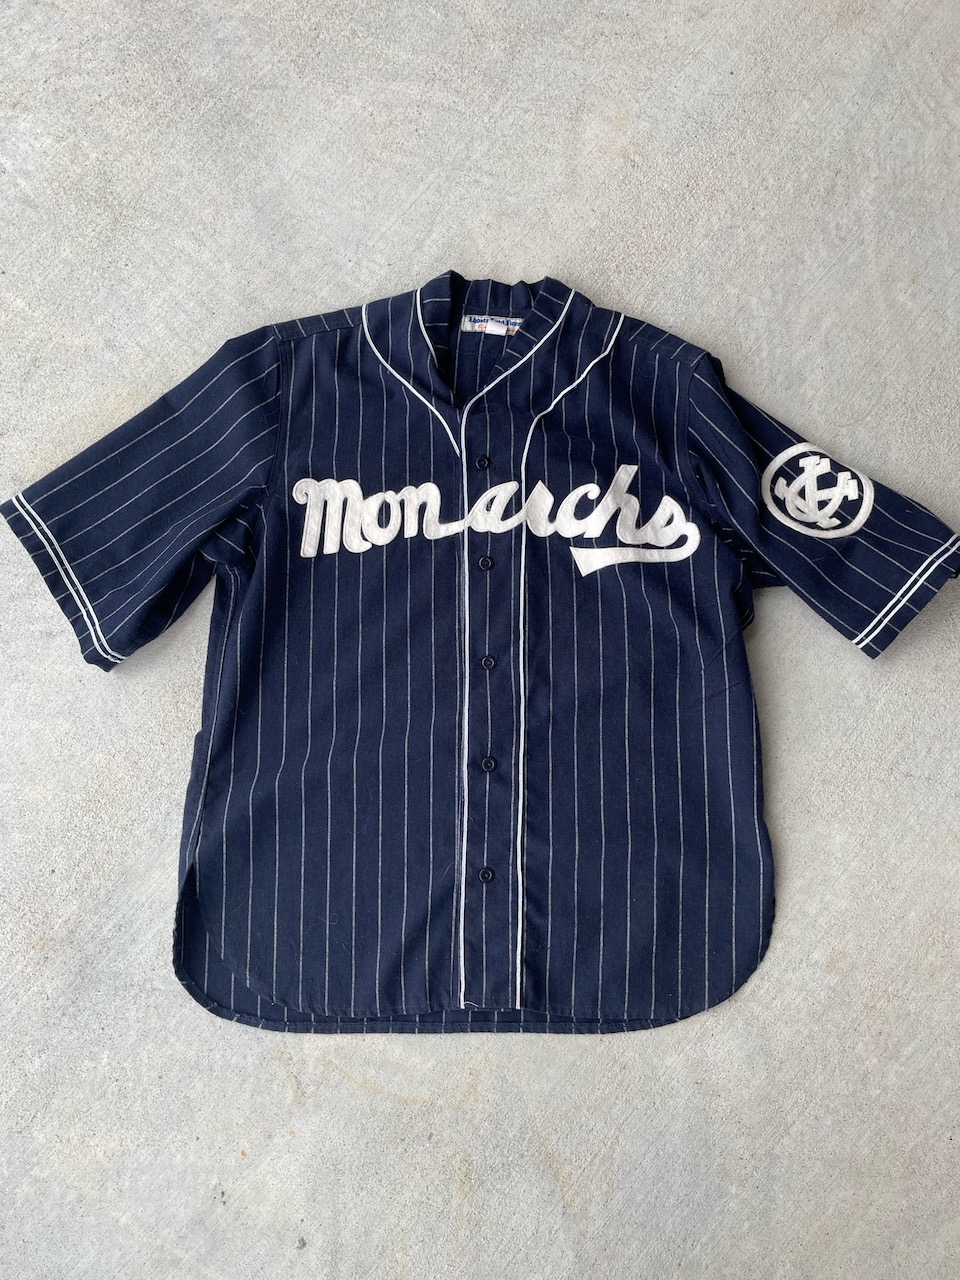 Vintage 1920’s Flannel Baseball Jersey